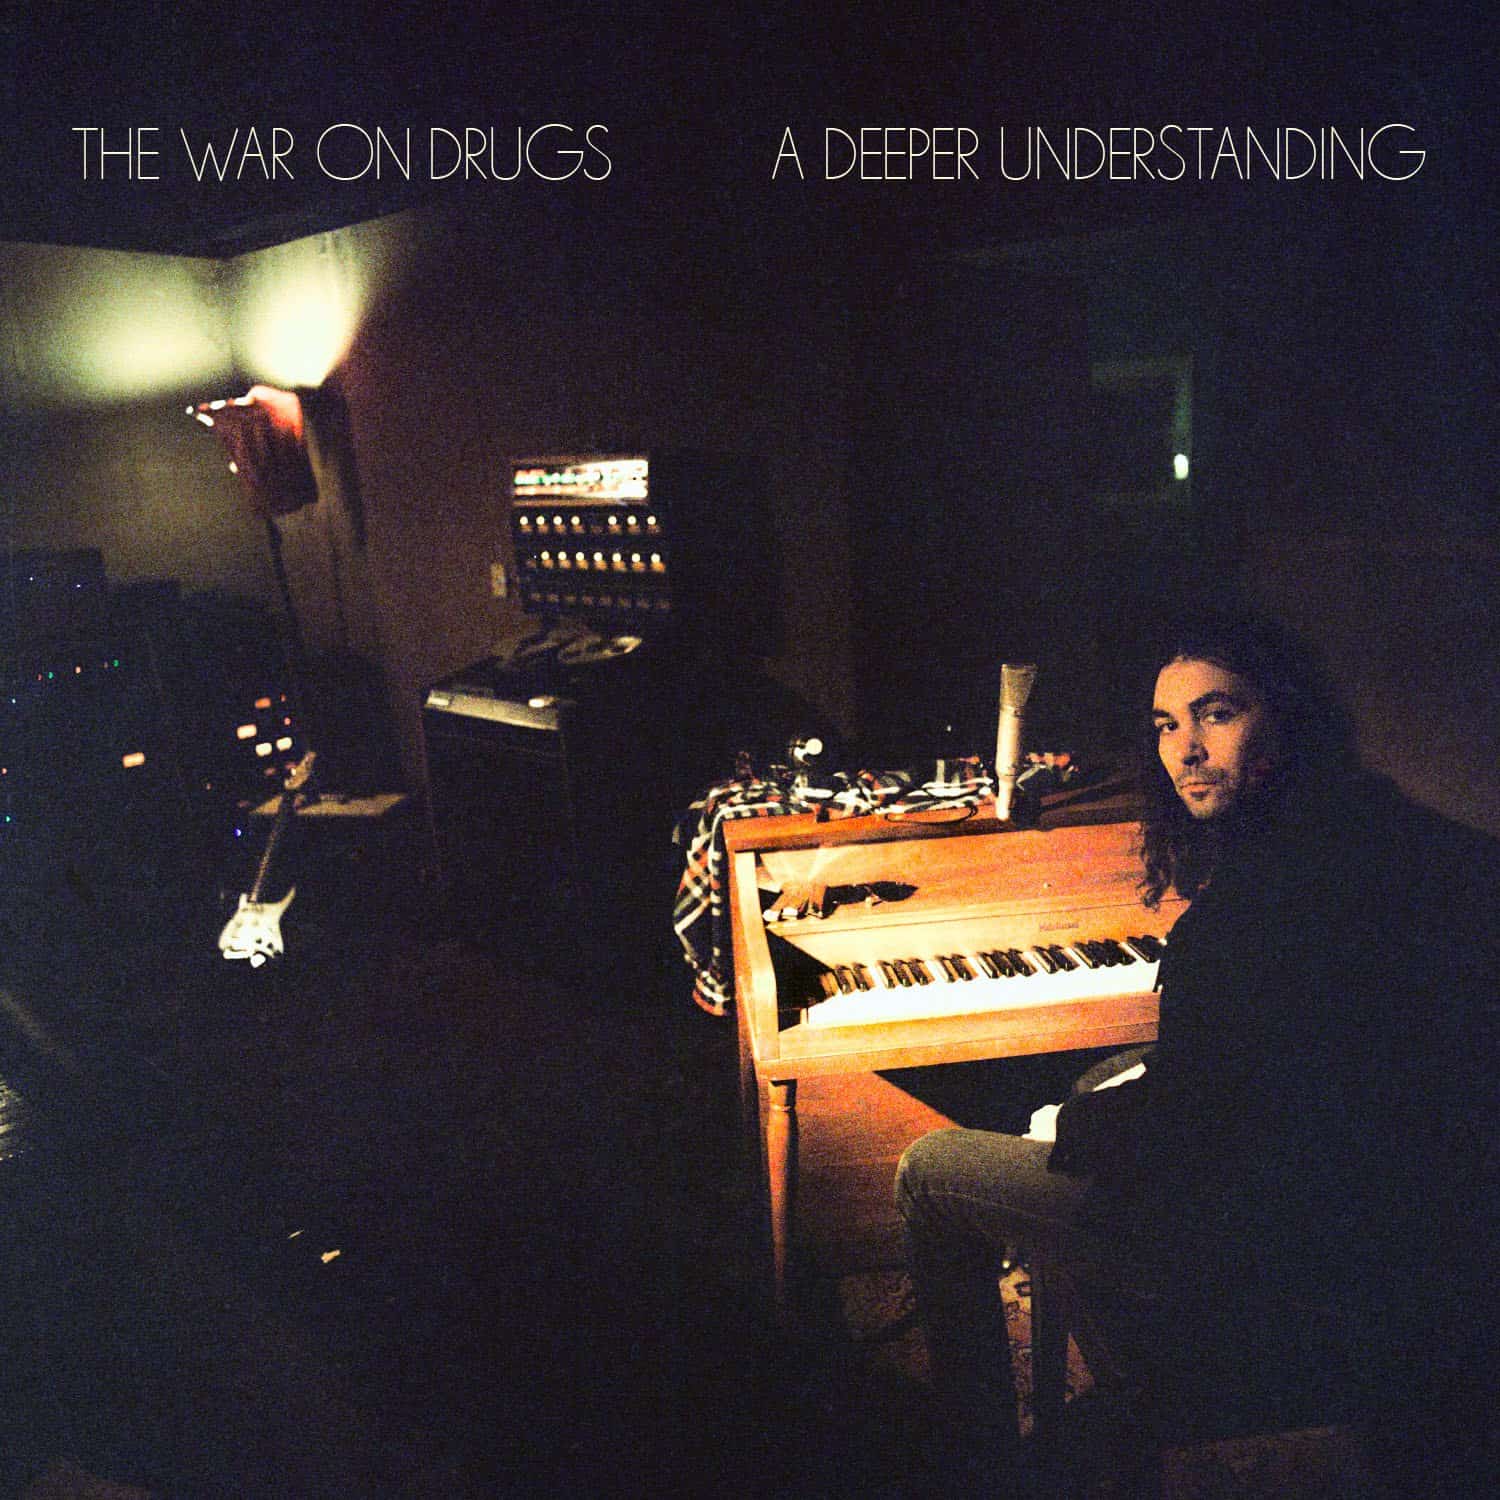 War-On-Drugs-A-Deeper-Understanding-vinyl-LP-record-album-front